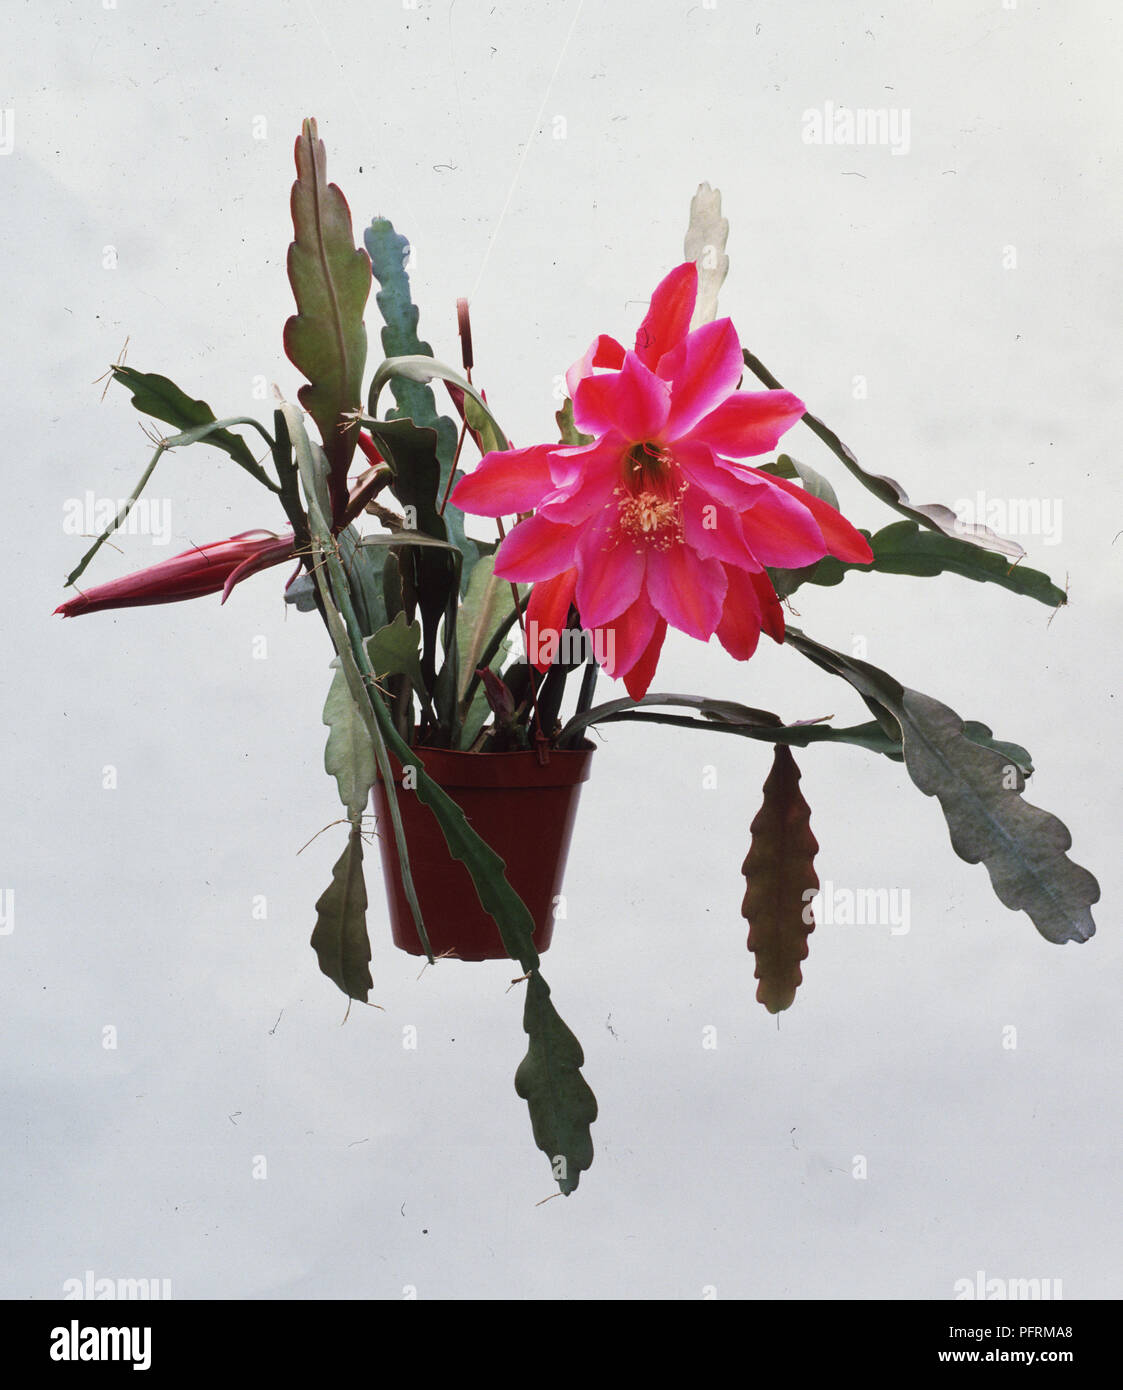 Hybrid cactus Epiphyllum 'Fantasy' (Orchid Cactus) with pink flower Stock Photo